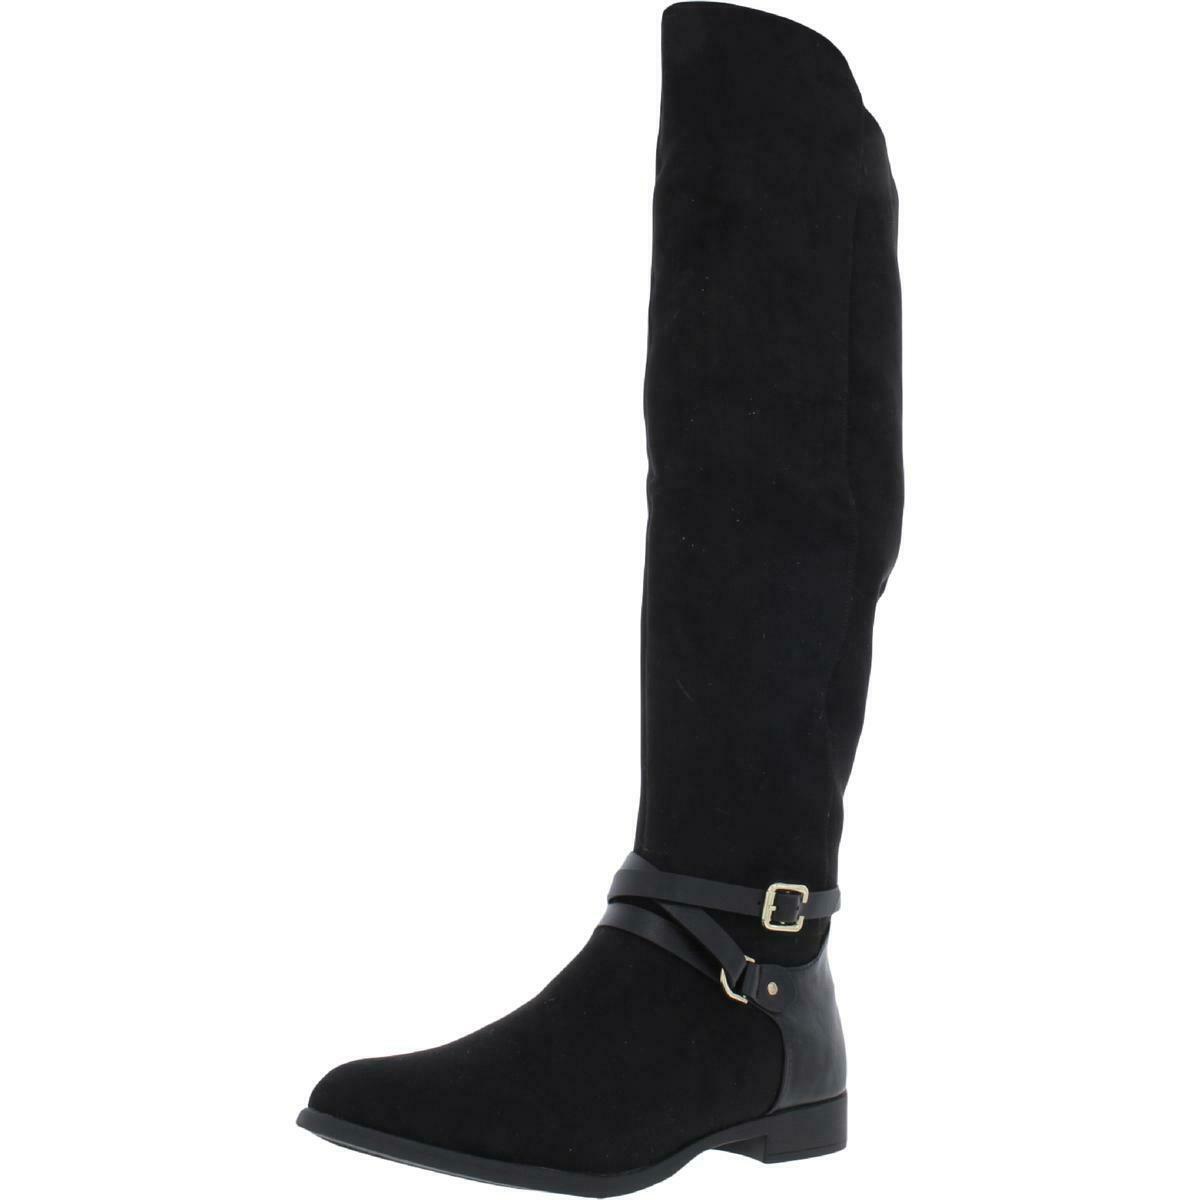 XOXO Womens Thames Black Over-The-Knee Boots Shoes 10 Medium (B,M) BHFO 2634